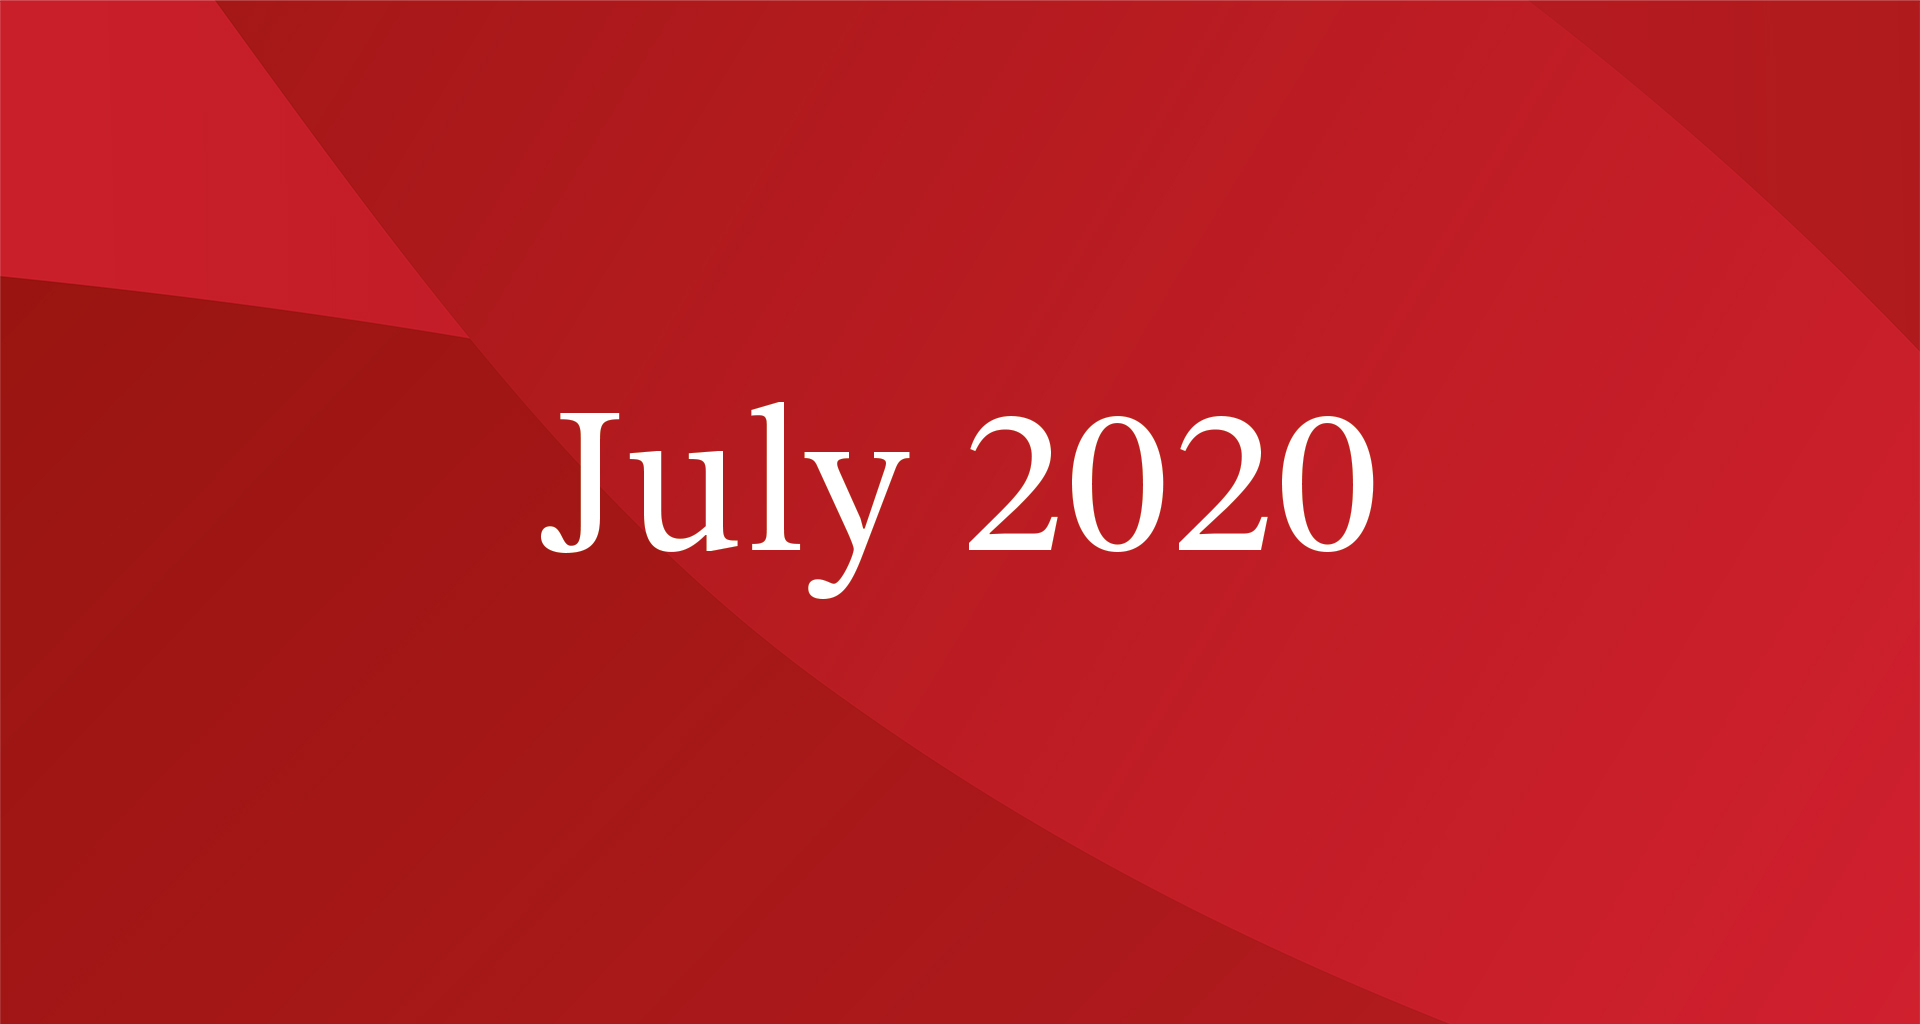 July 2020 President's Blog Image